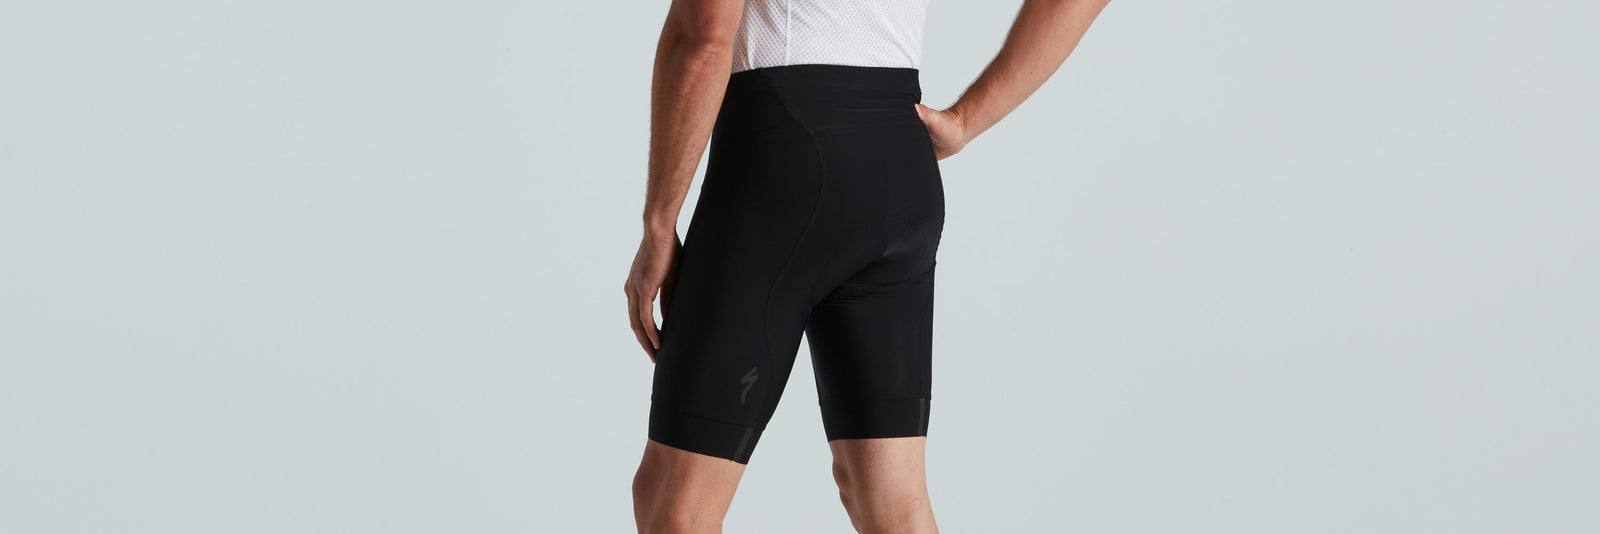 OCOMMO Biker Shorts for Women Waist 3 Inch Thigh Saver Shorts for